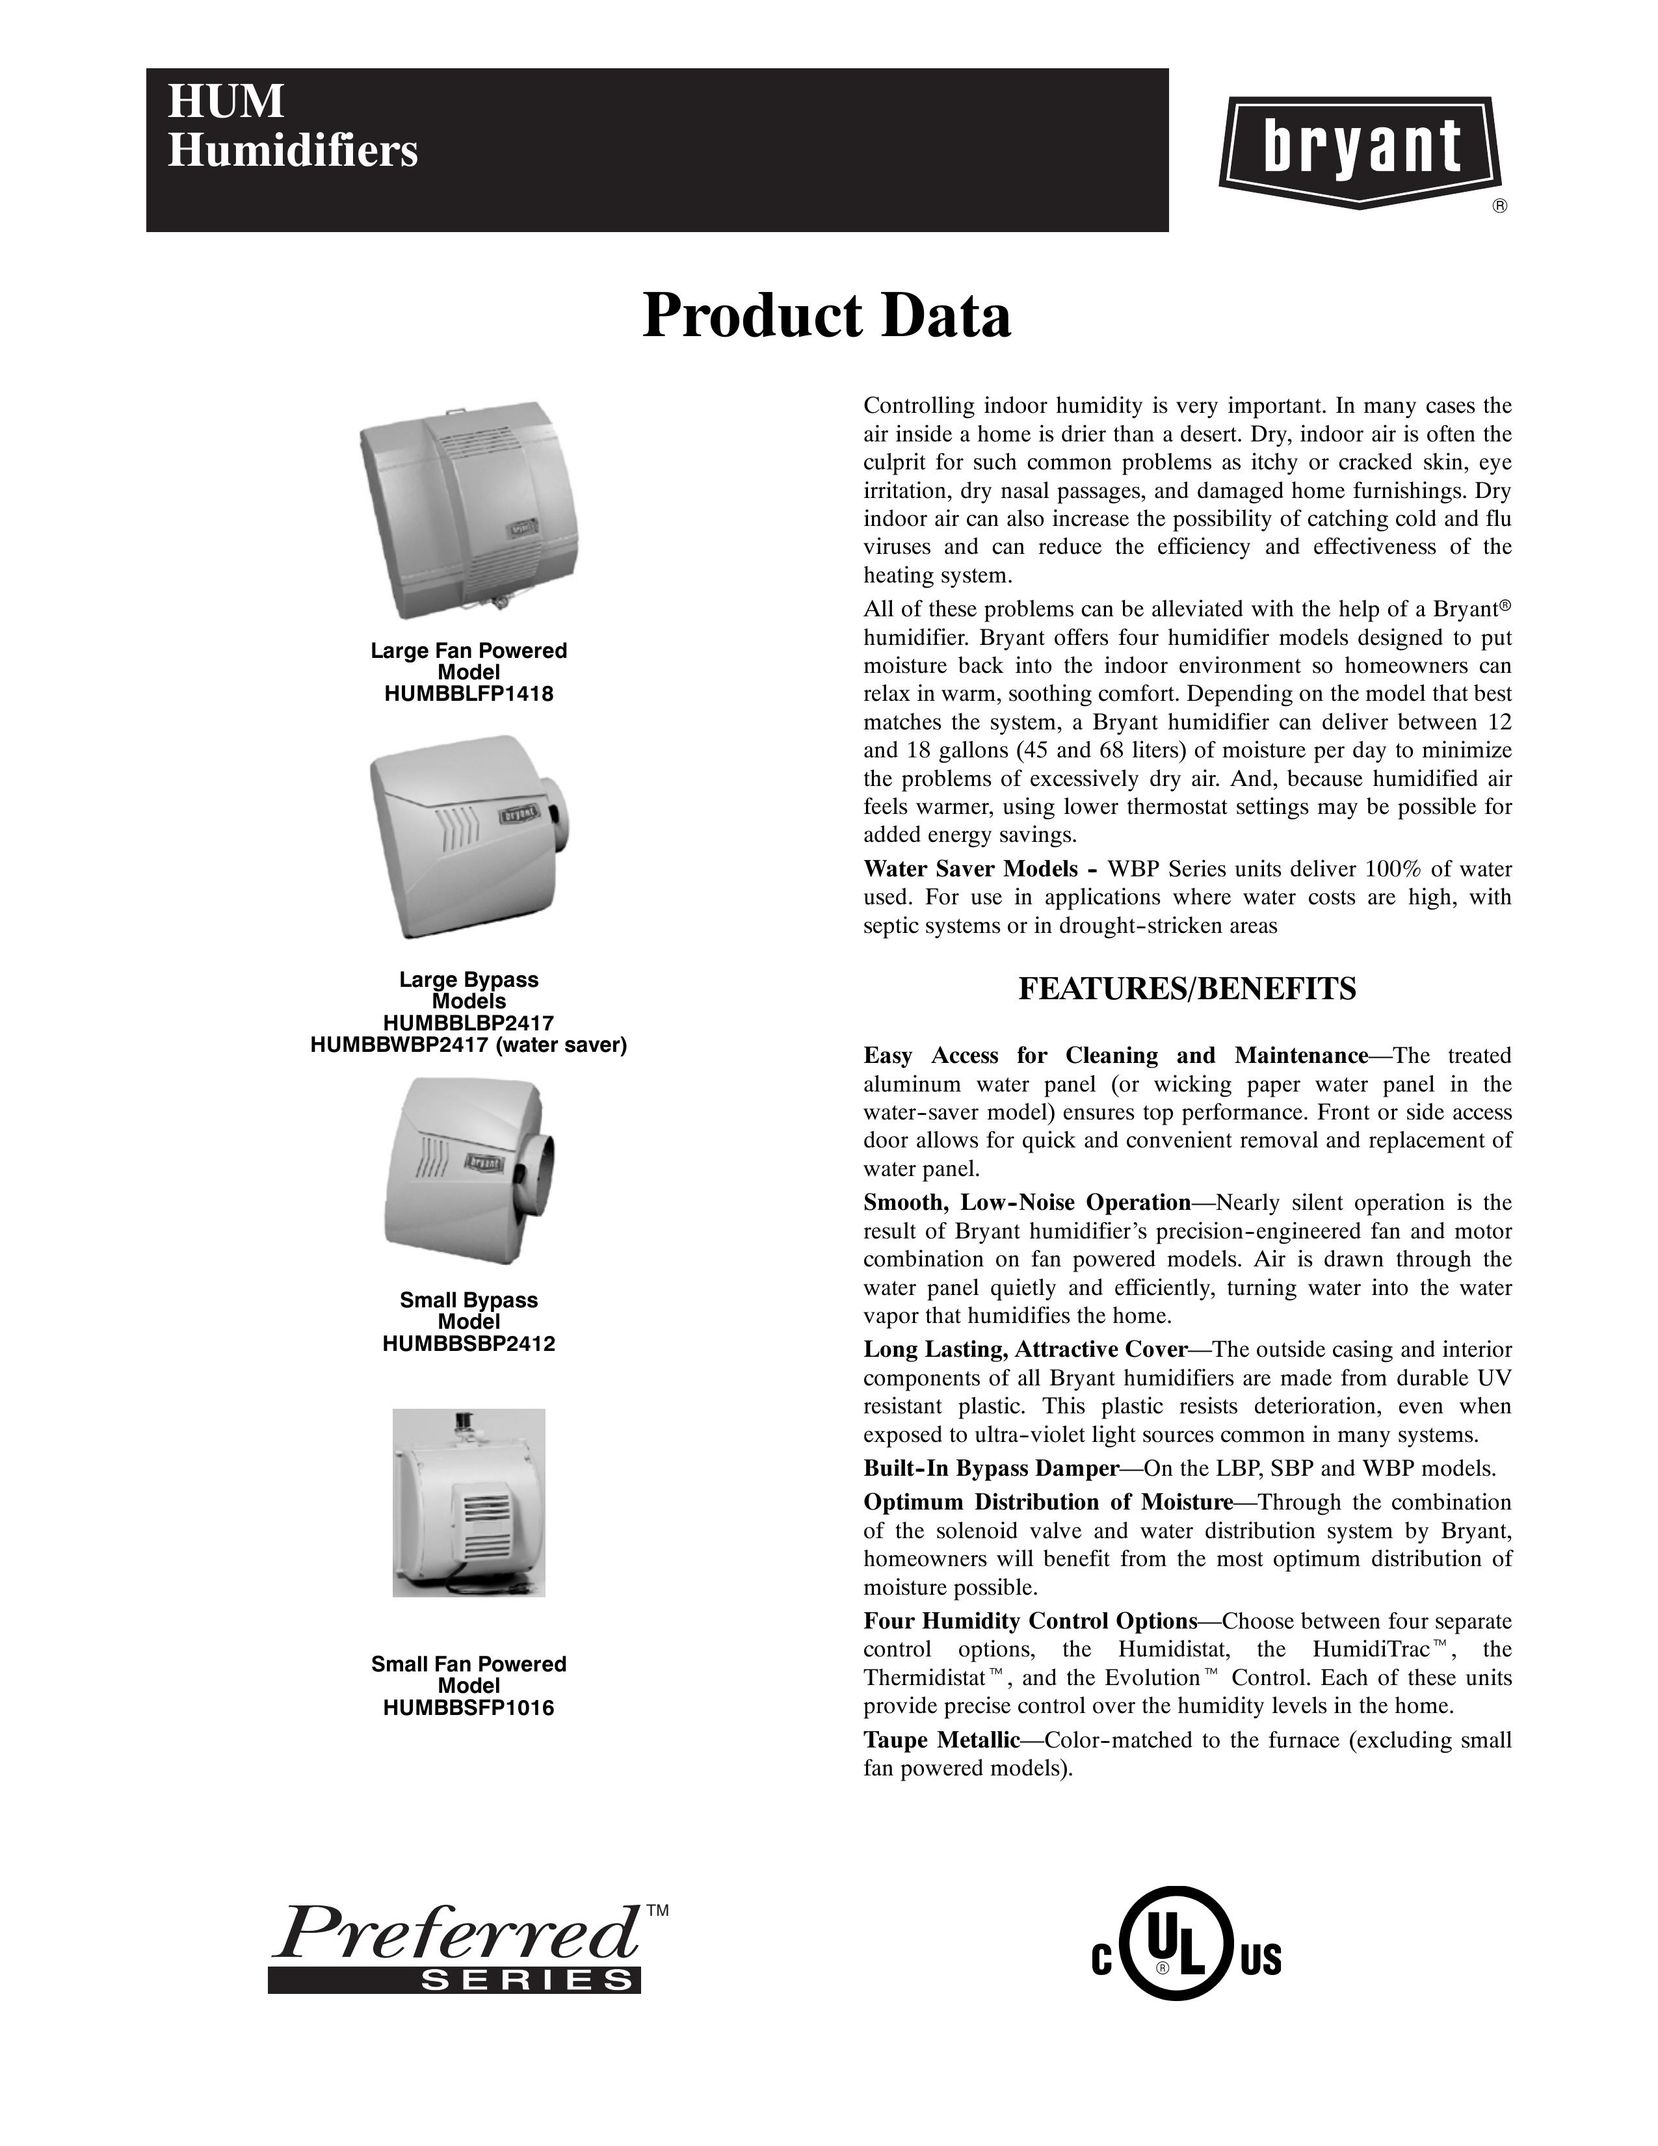 Bryant HUMBBLFP1418 Dehumidifier User Manual